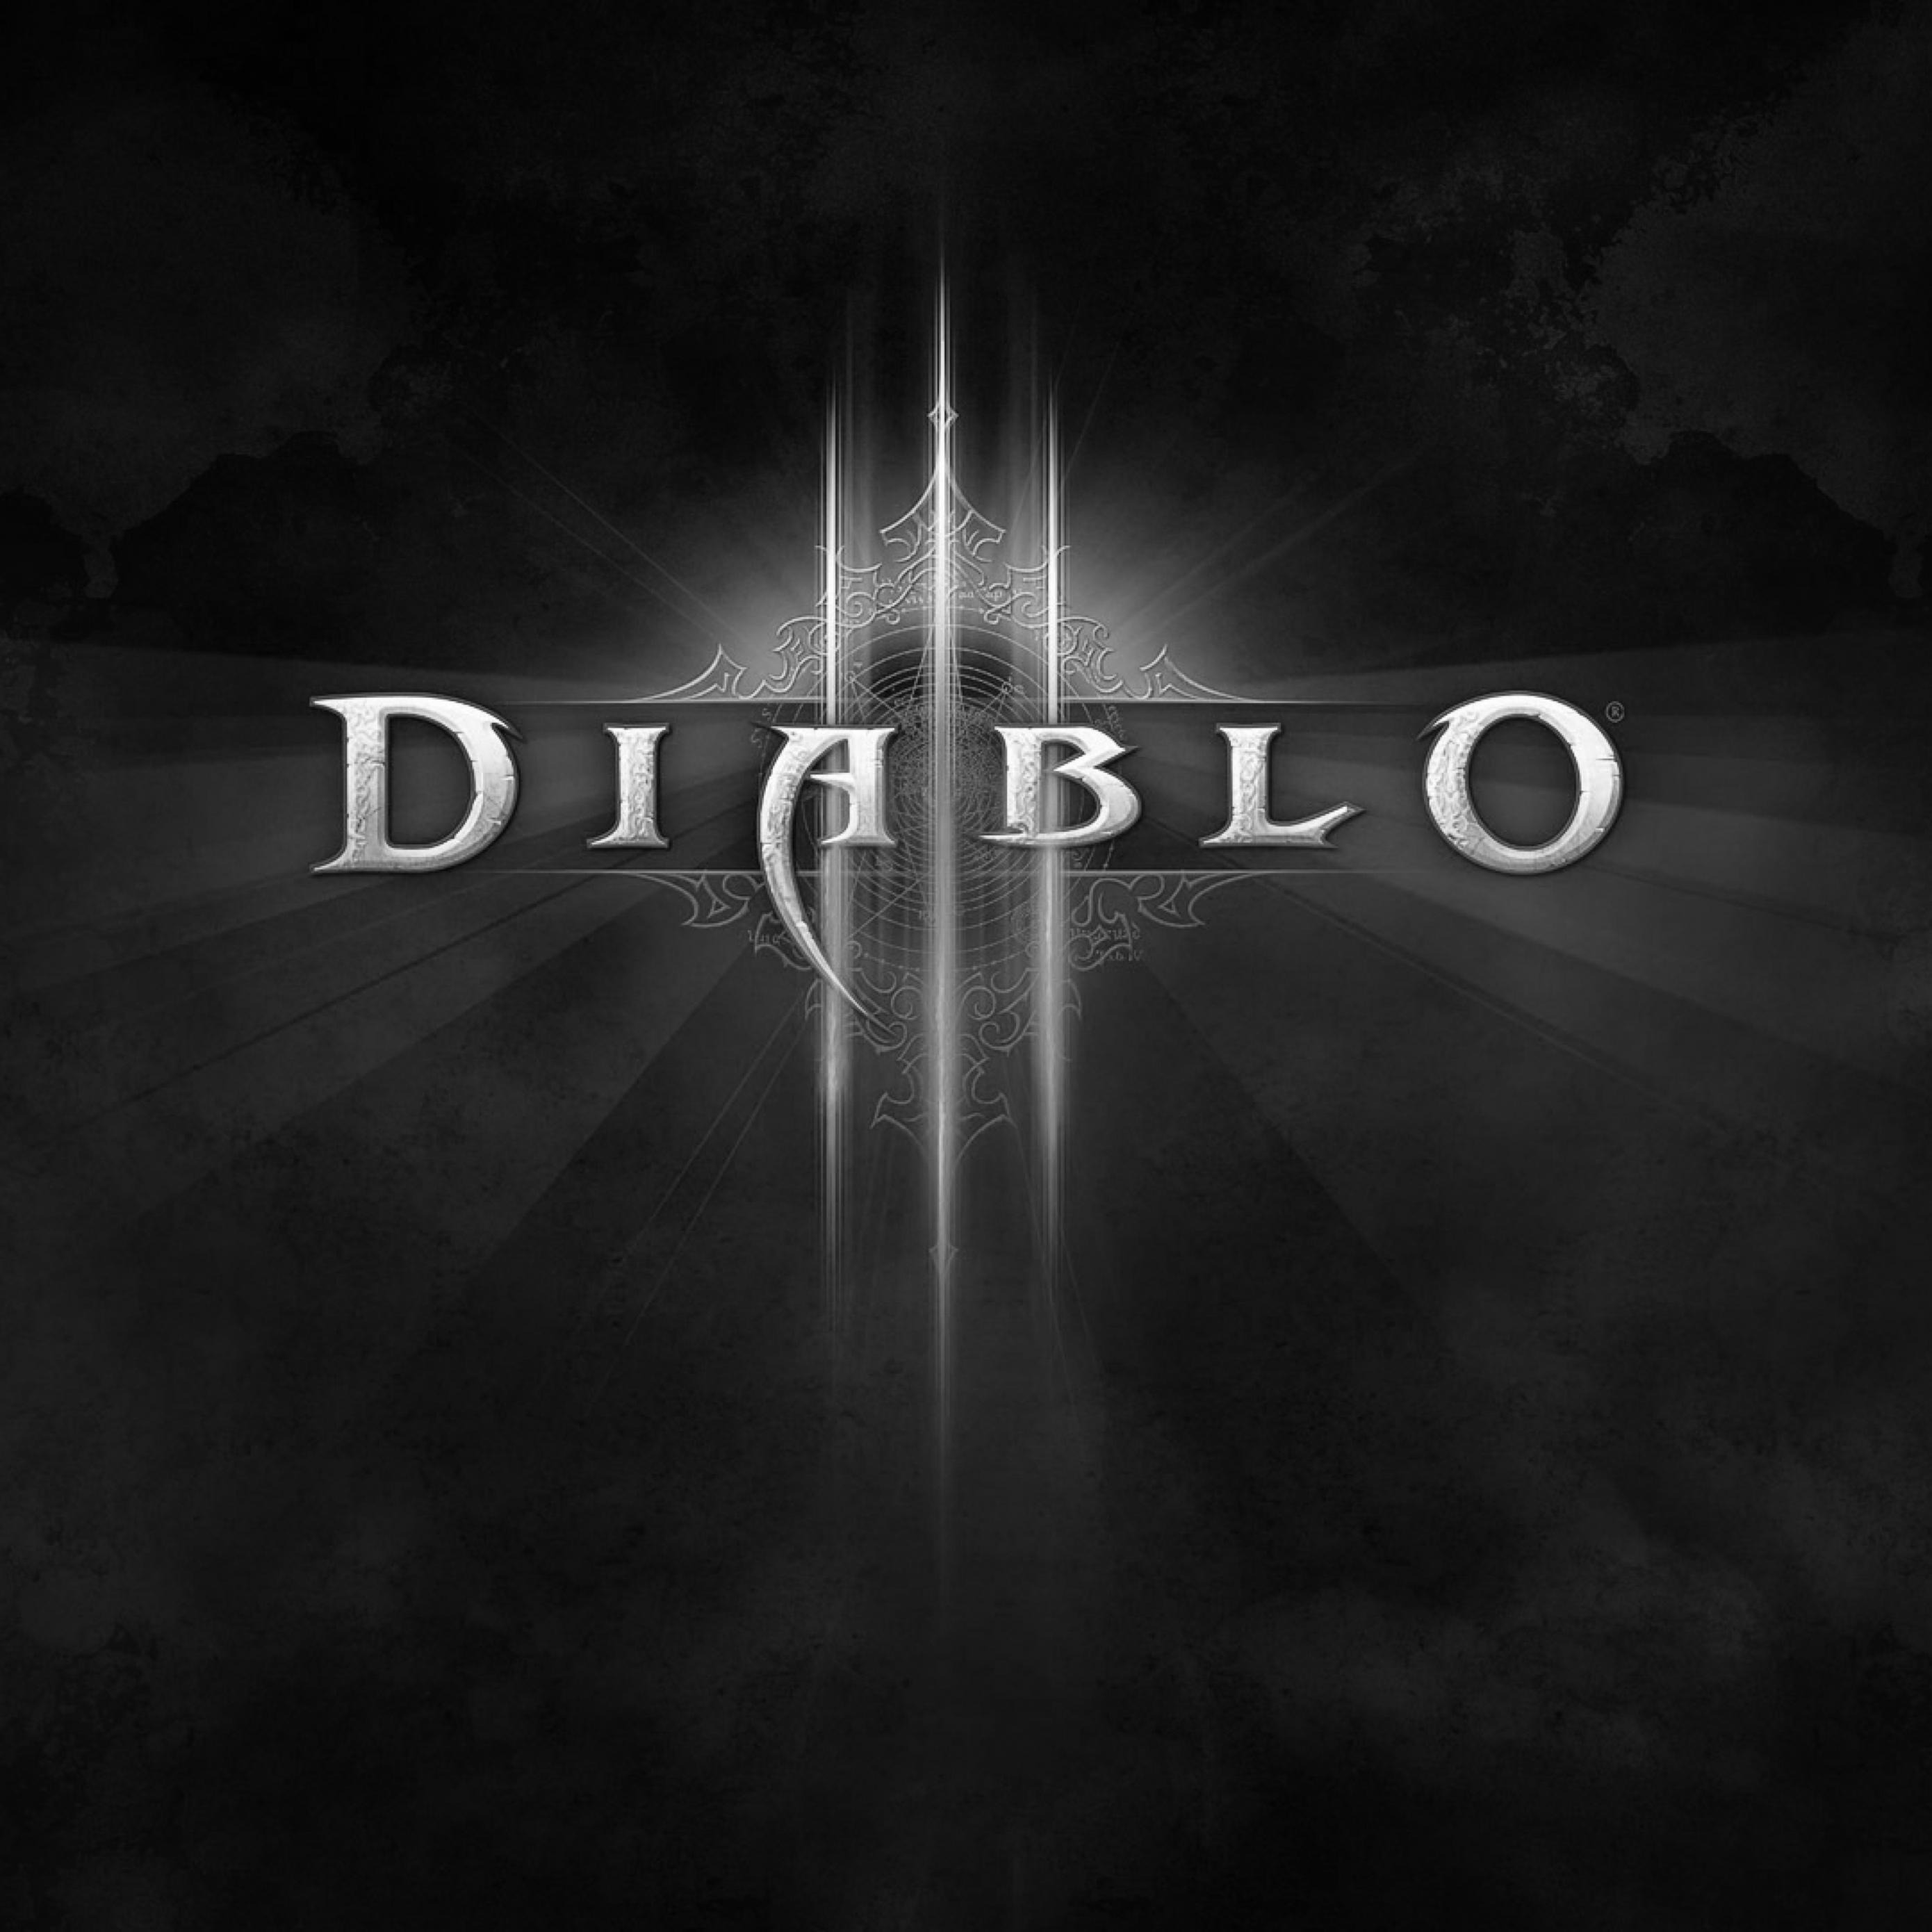 Download Diablo, Name, Black And White Apple iPad Air wallpaper